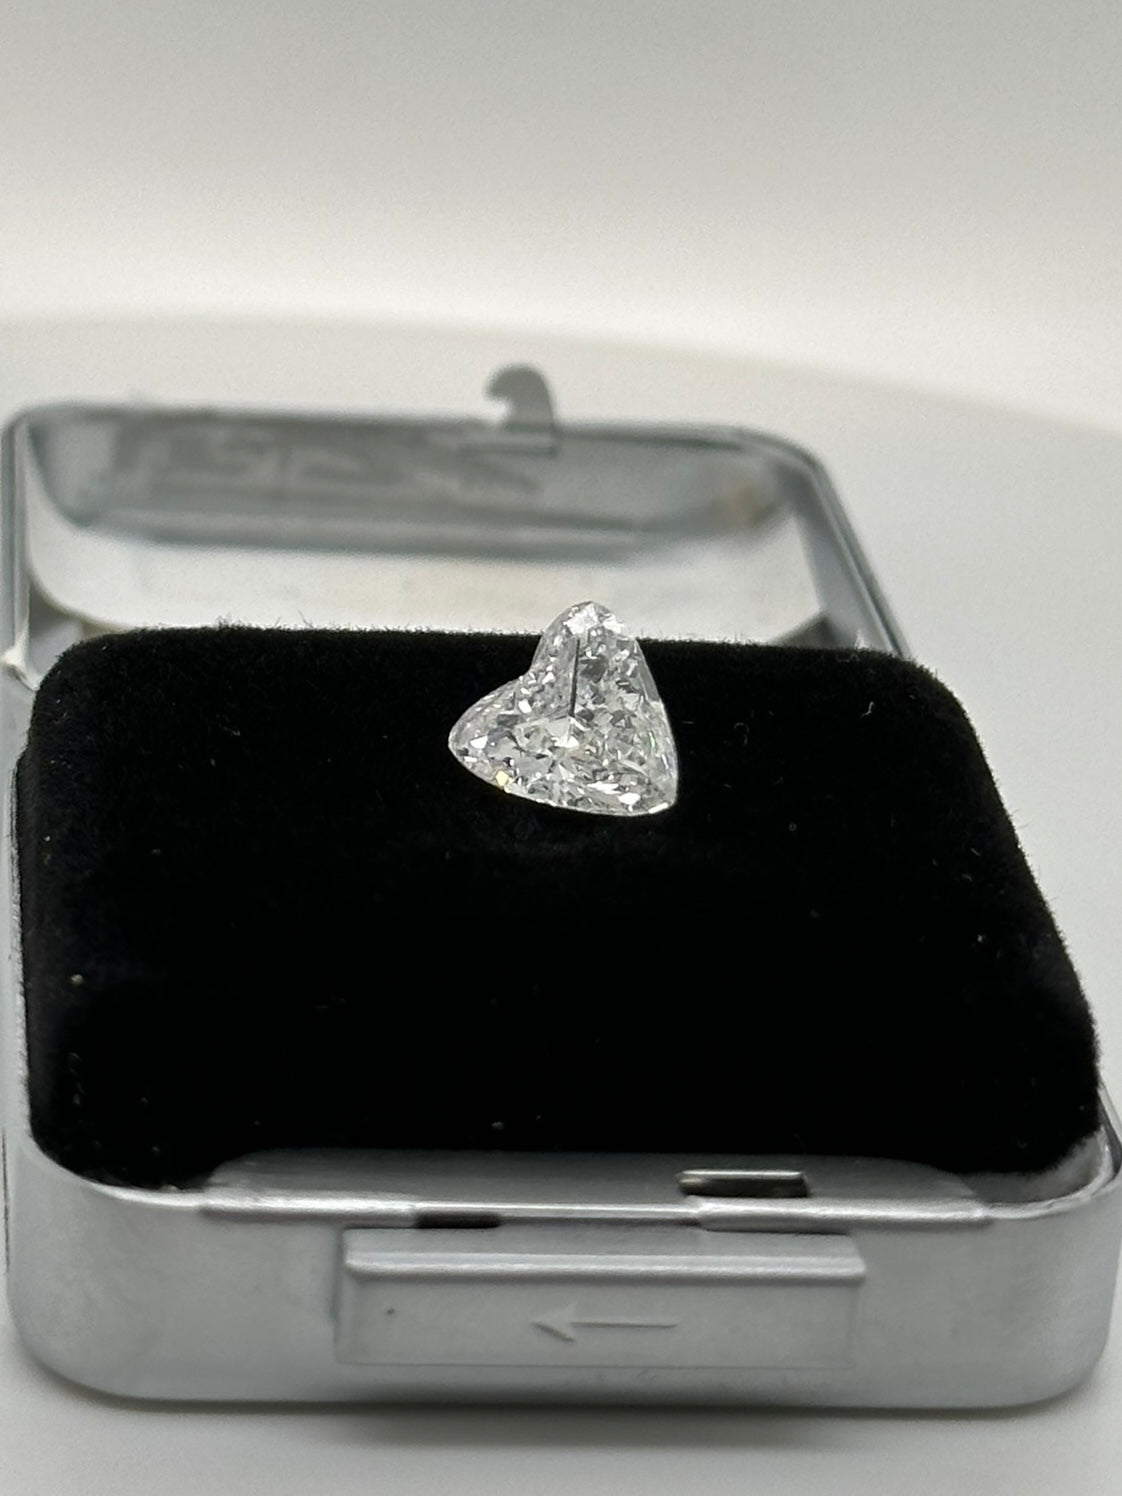 EGL 1.94CT Heart Cut Diamond